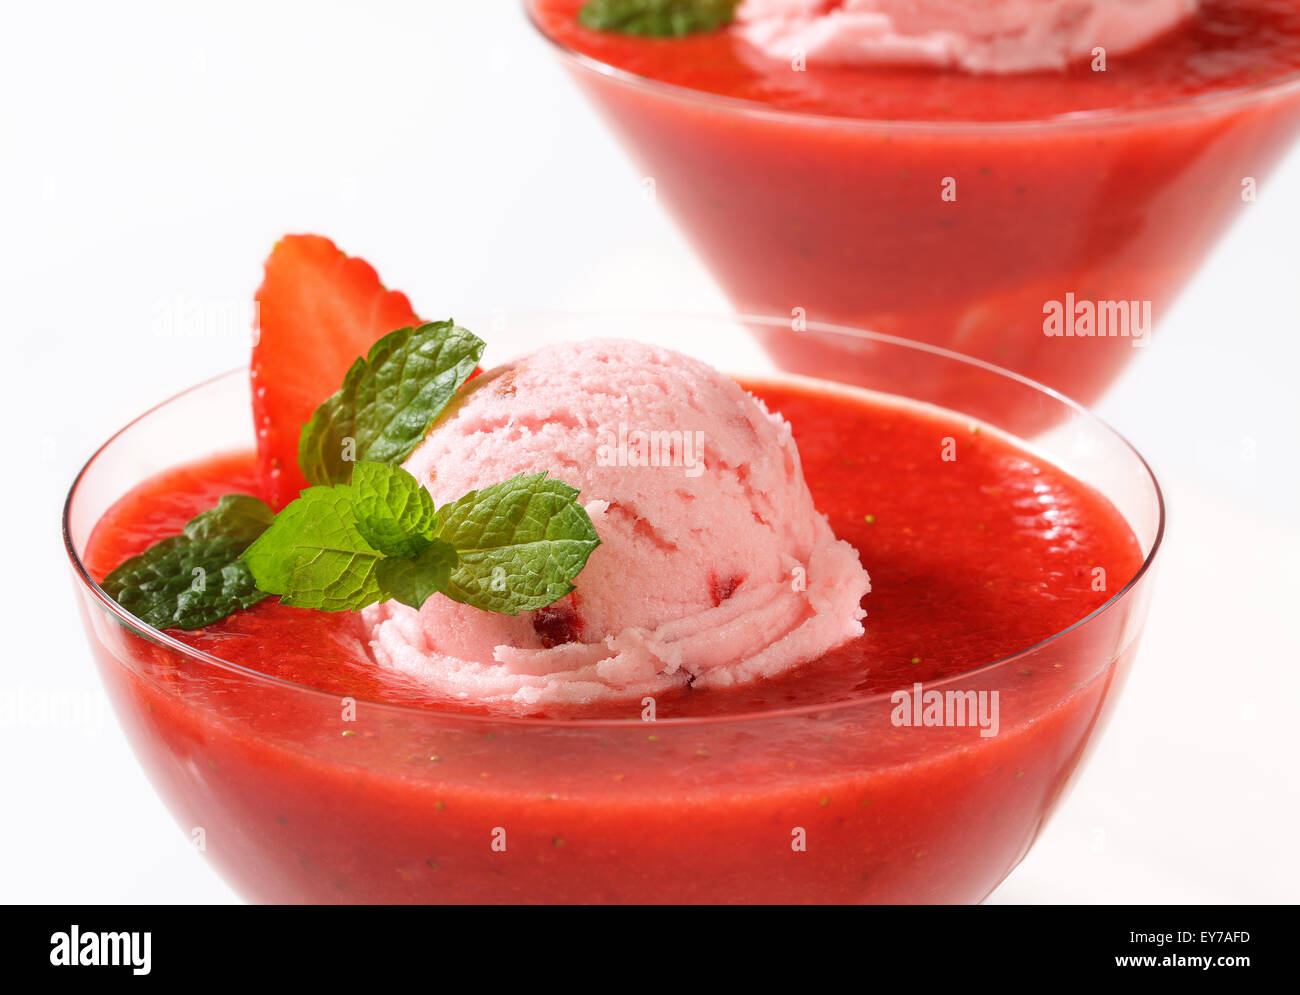 Eis mit Erdbeerpüree in Stielgläser Stockfoto